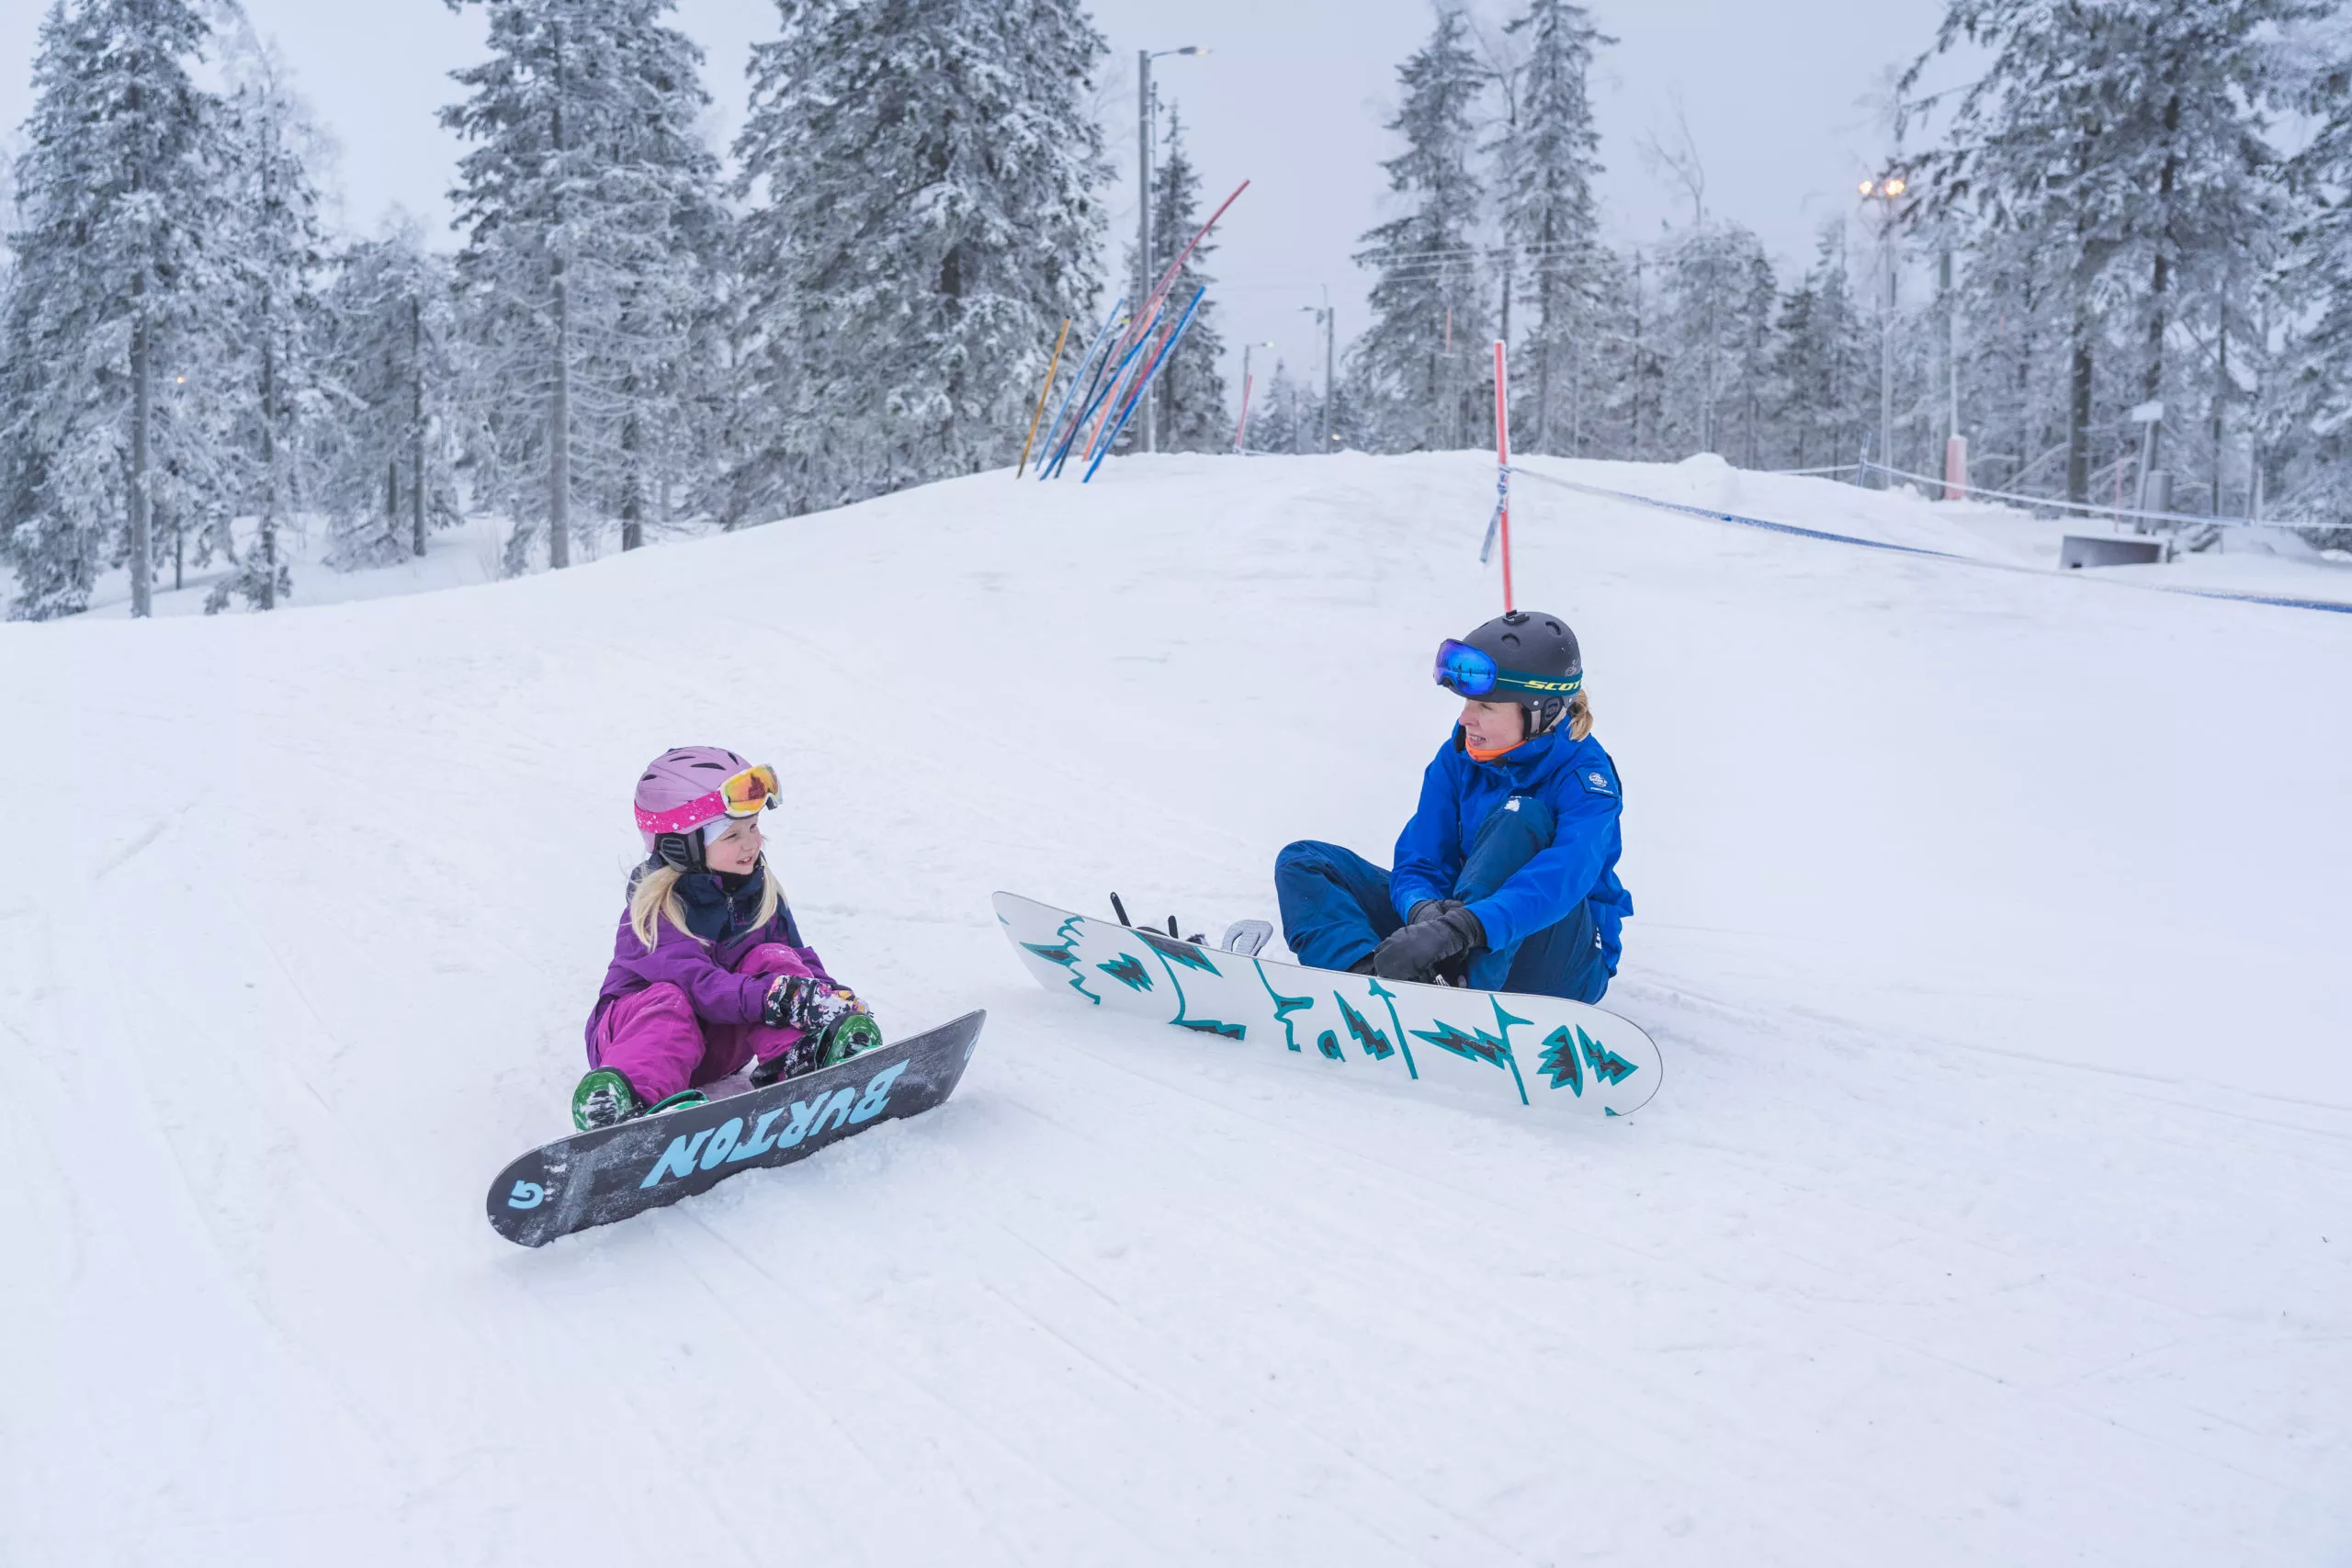 Tahko Ski Resort in Finland, Europe | Snowboarding,Skiing - Rated 0.8